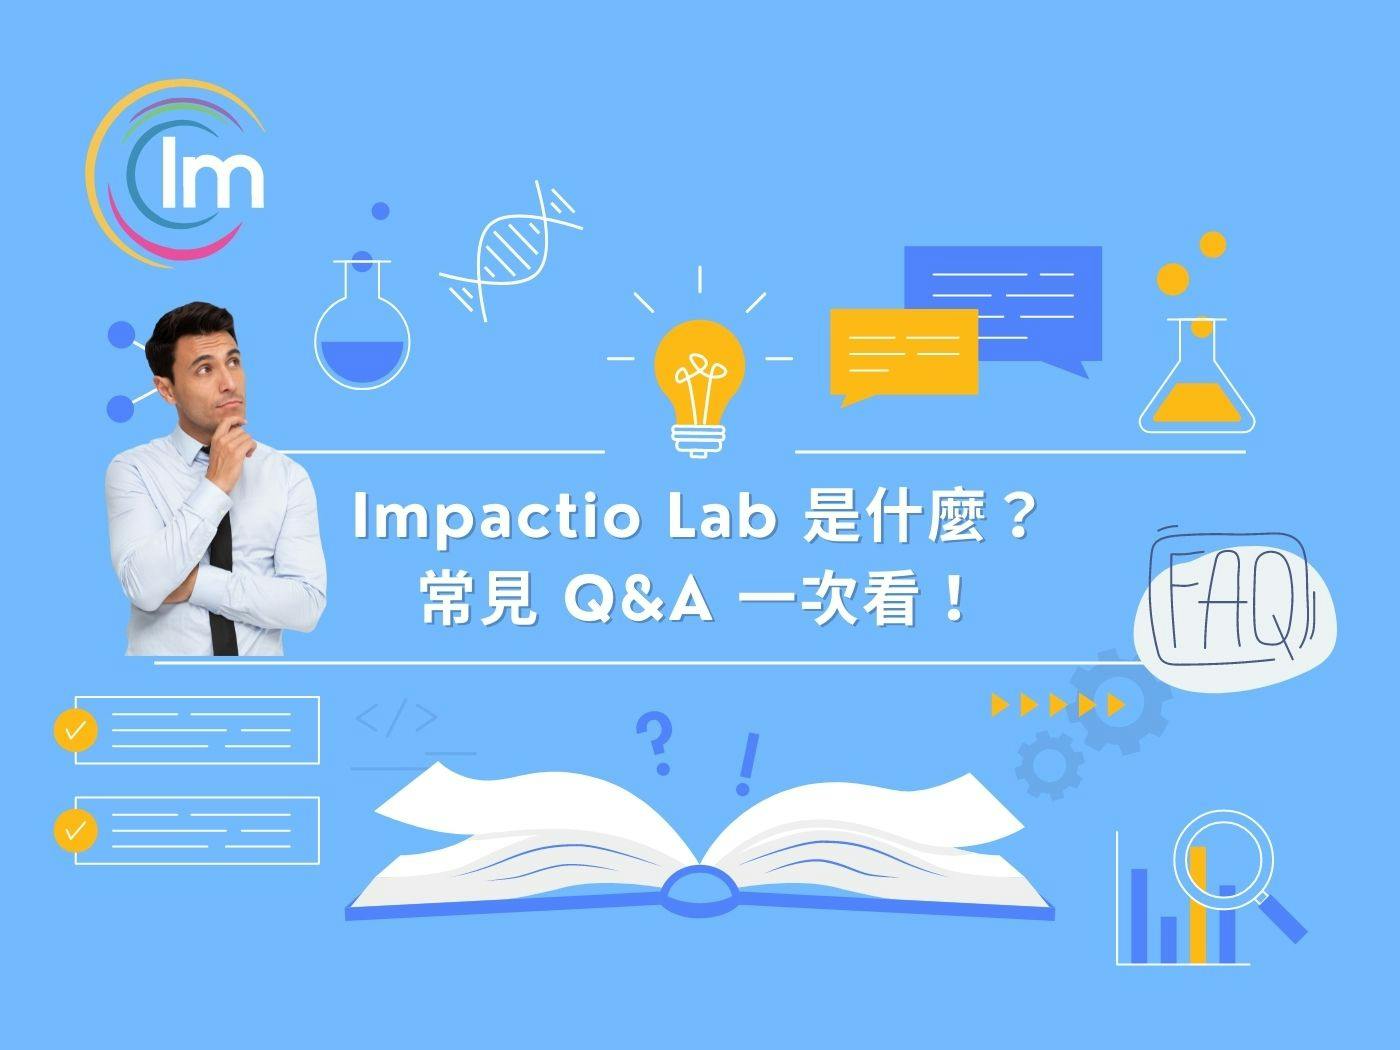 Impactio Lab 是什麼？適合我的團隊嗎？ 常見Q&A一次看！
